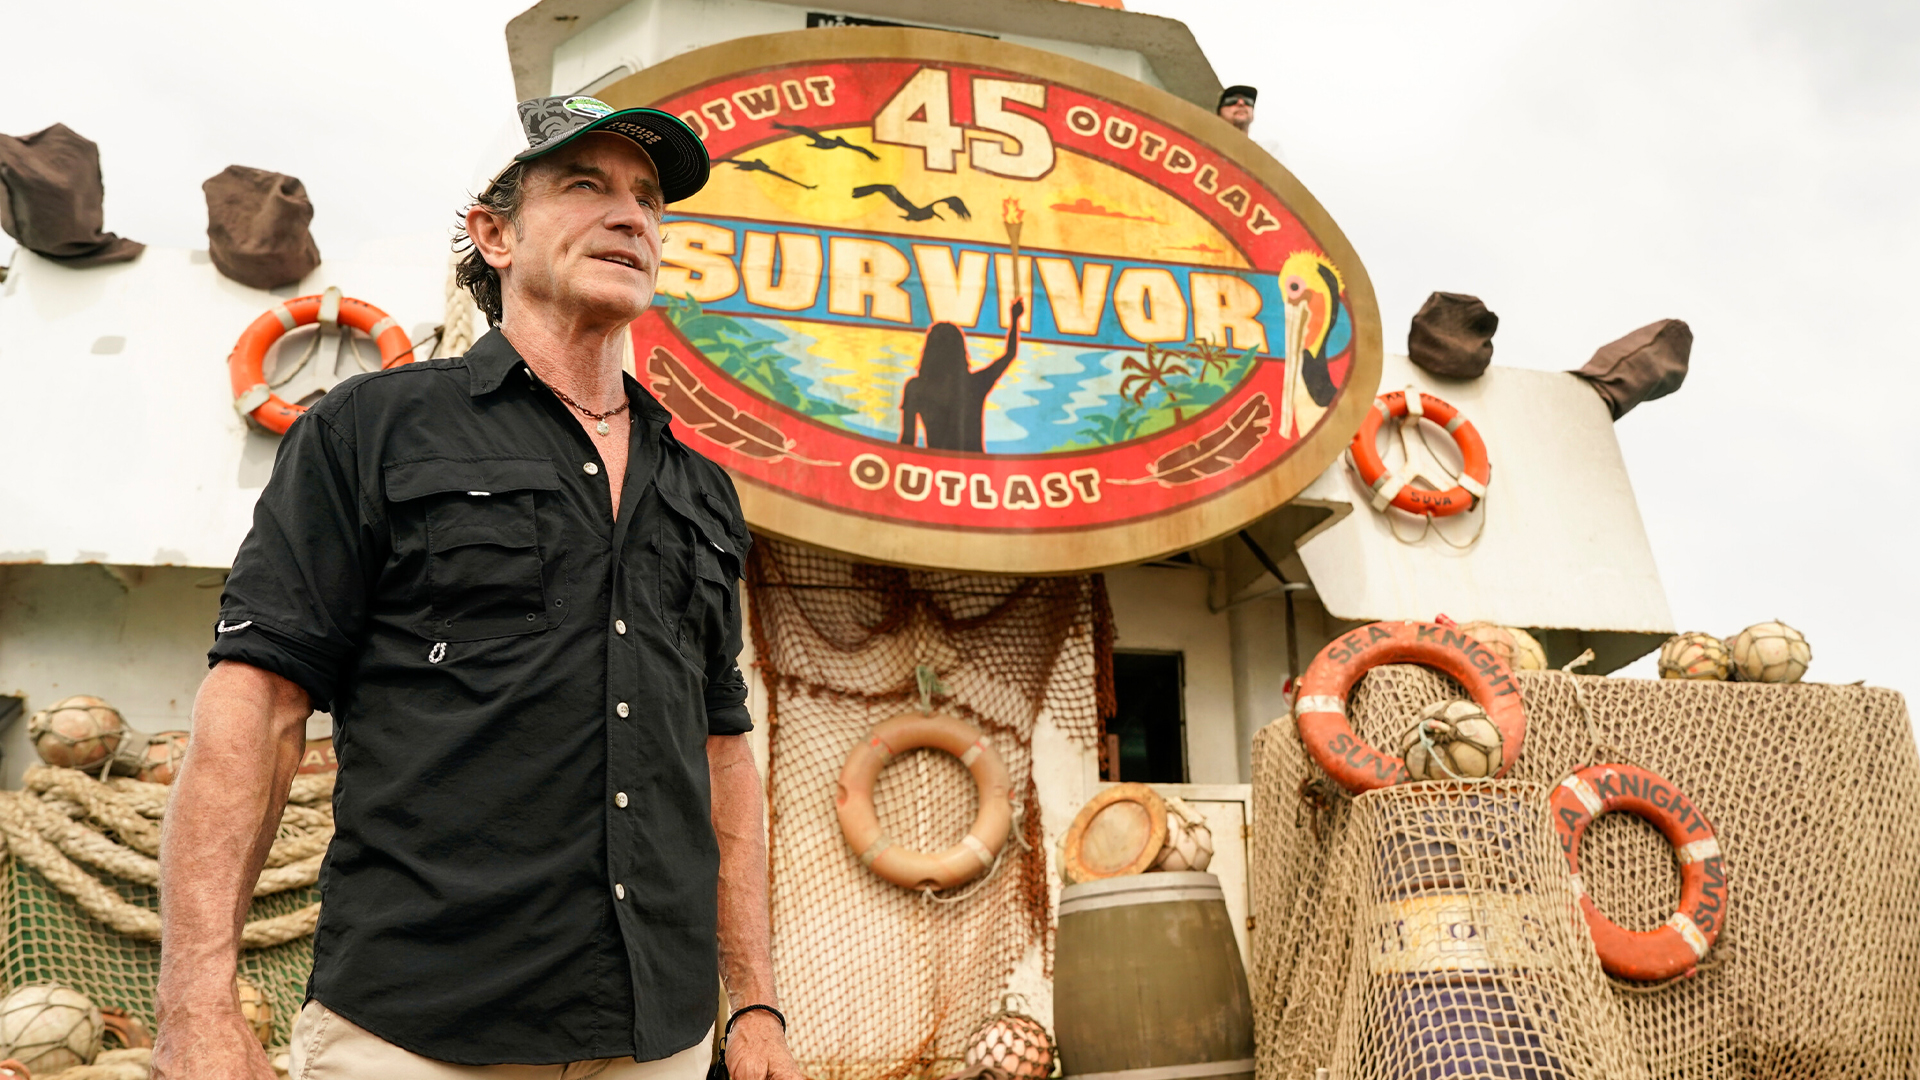 Meet Survivor's Season 45 Contestants